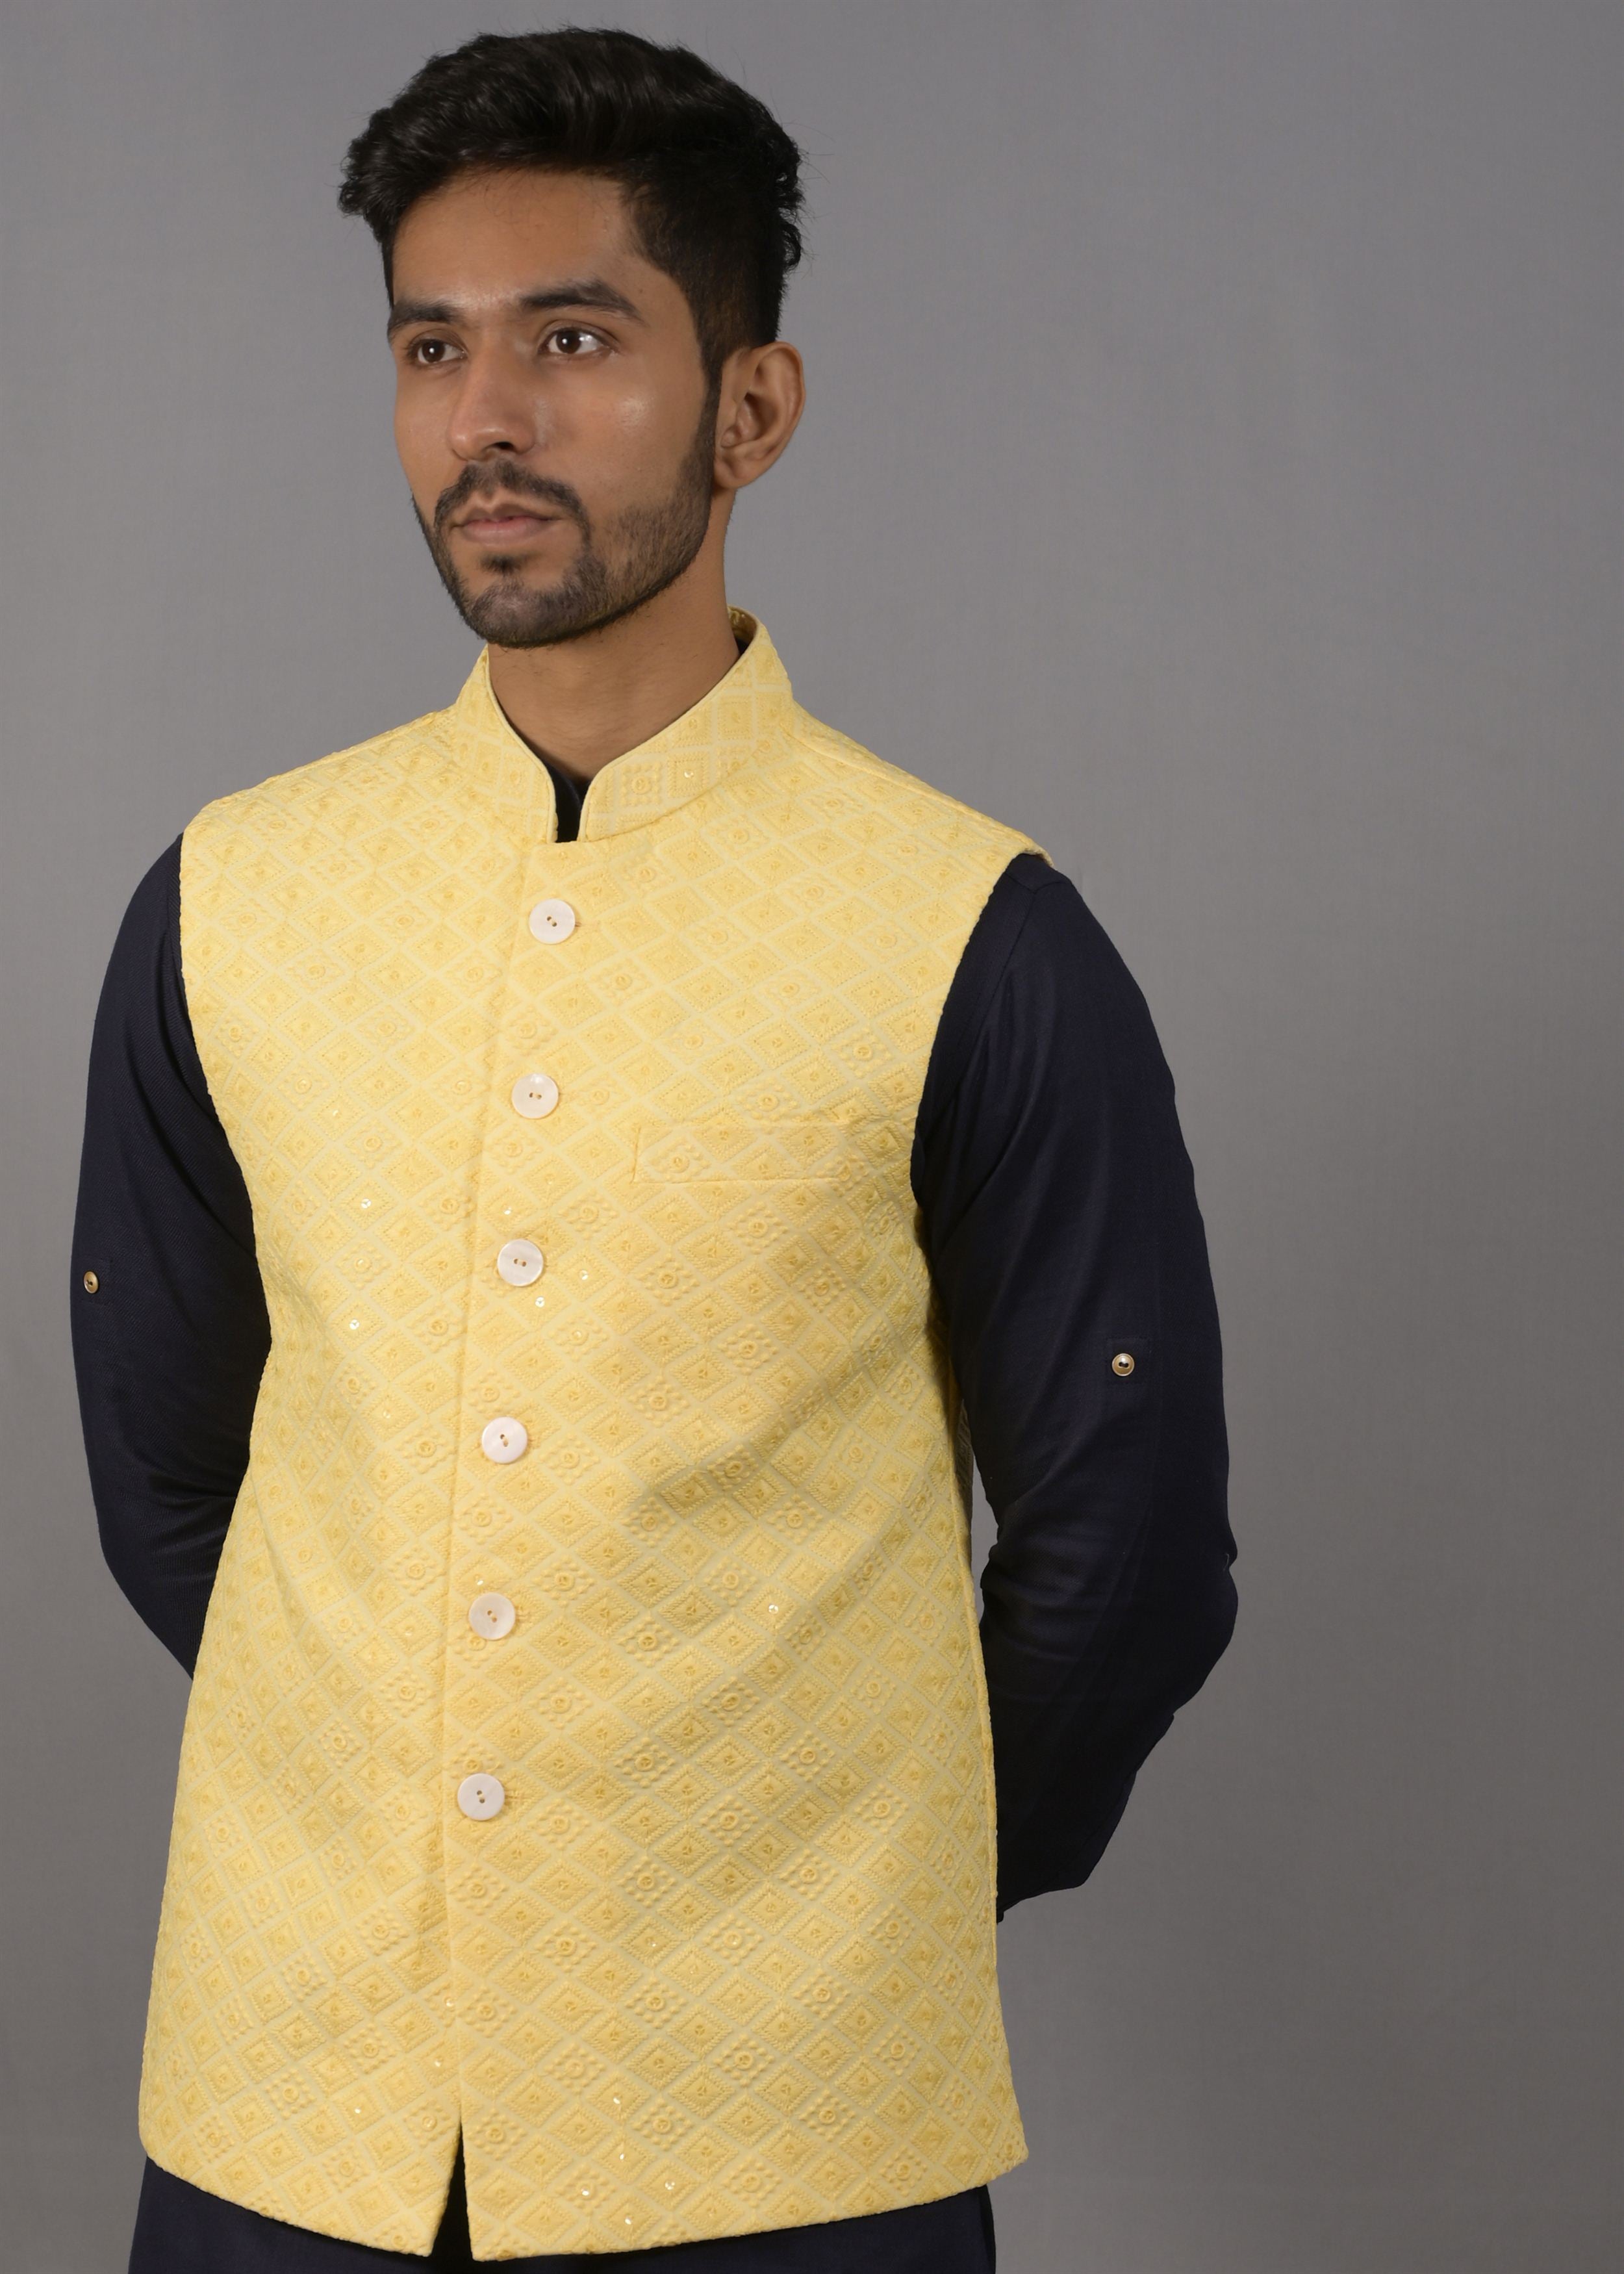 Buy Nehru Jacket for Men Online India, USA | Ethnic Wears - Sachin's